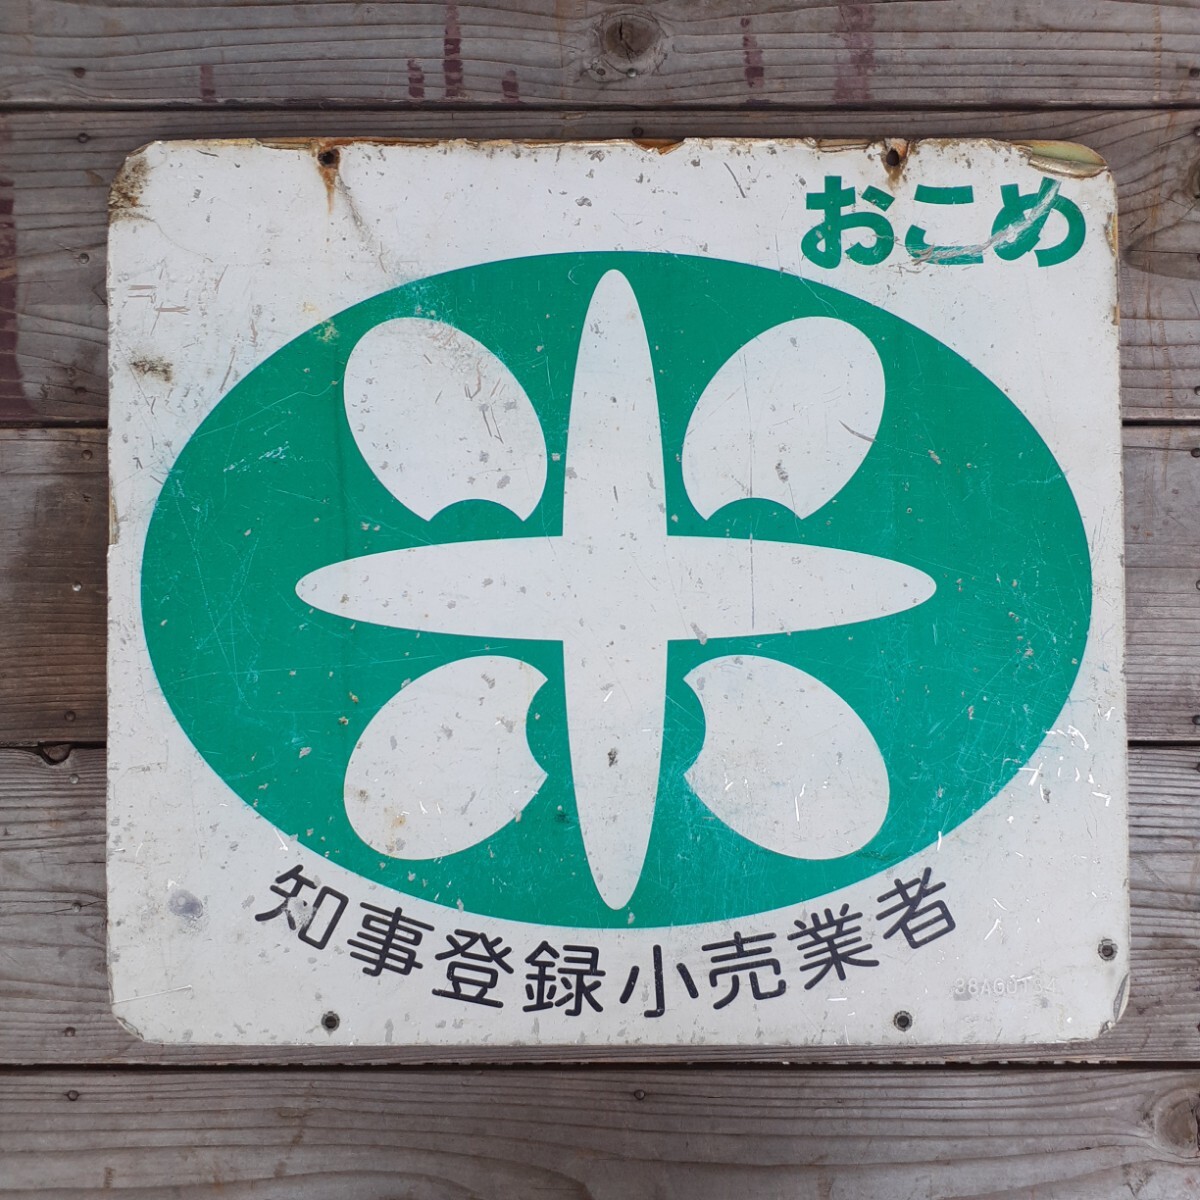 [..... shop ] Showa Retro . rice shop san. signboard that time thing both sides signboard plastic pra signboard plate enamel signboard horn low signboard collection 